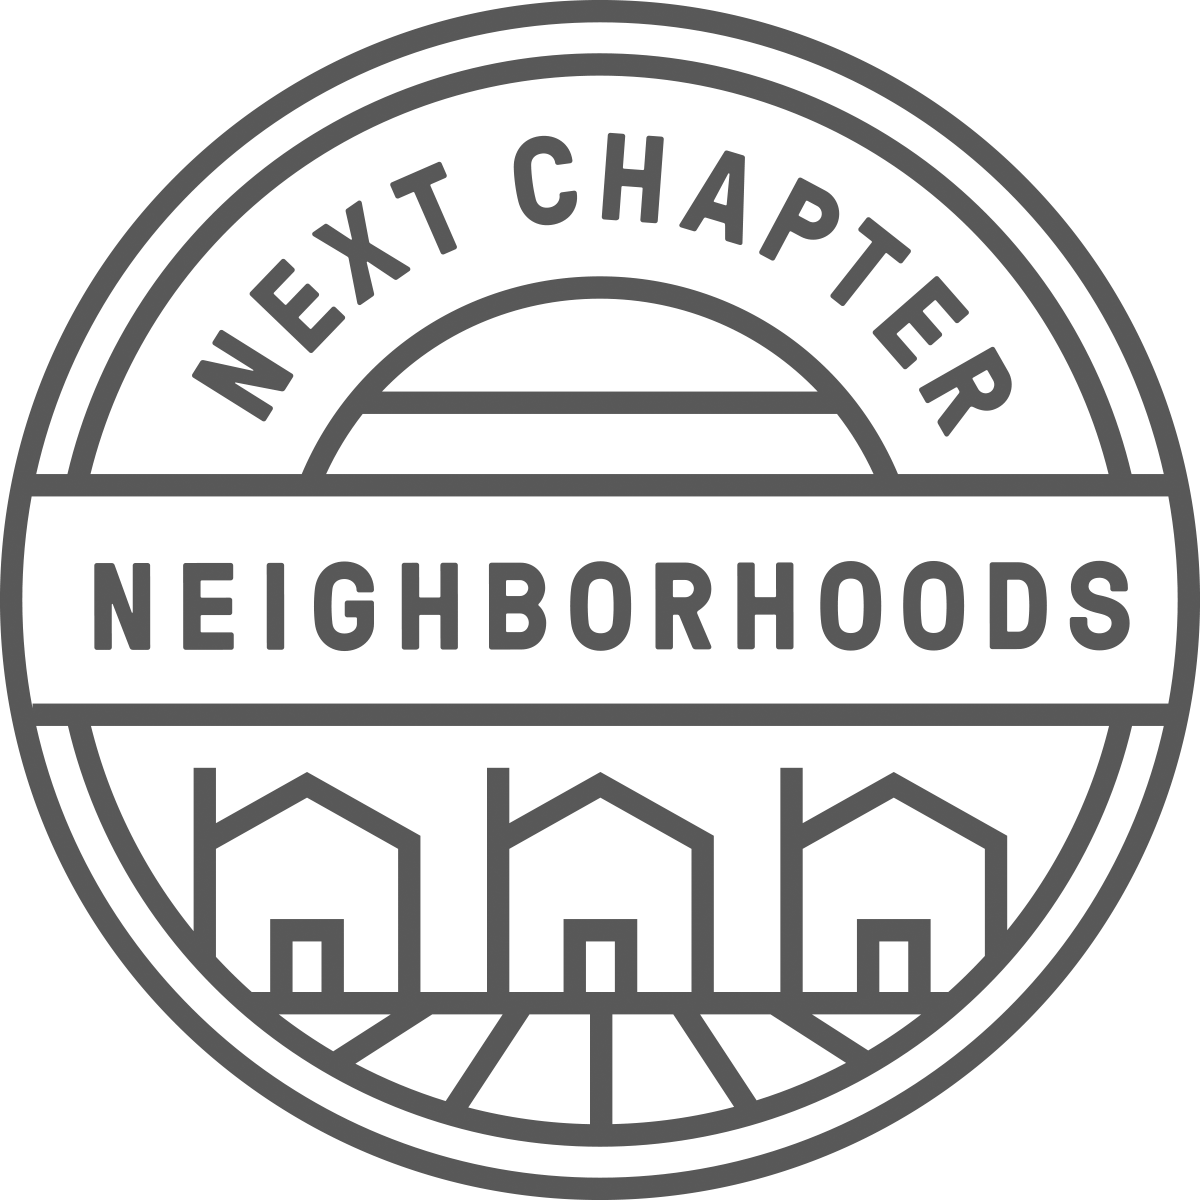 Next Chapter Neighborhoods